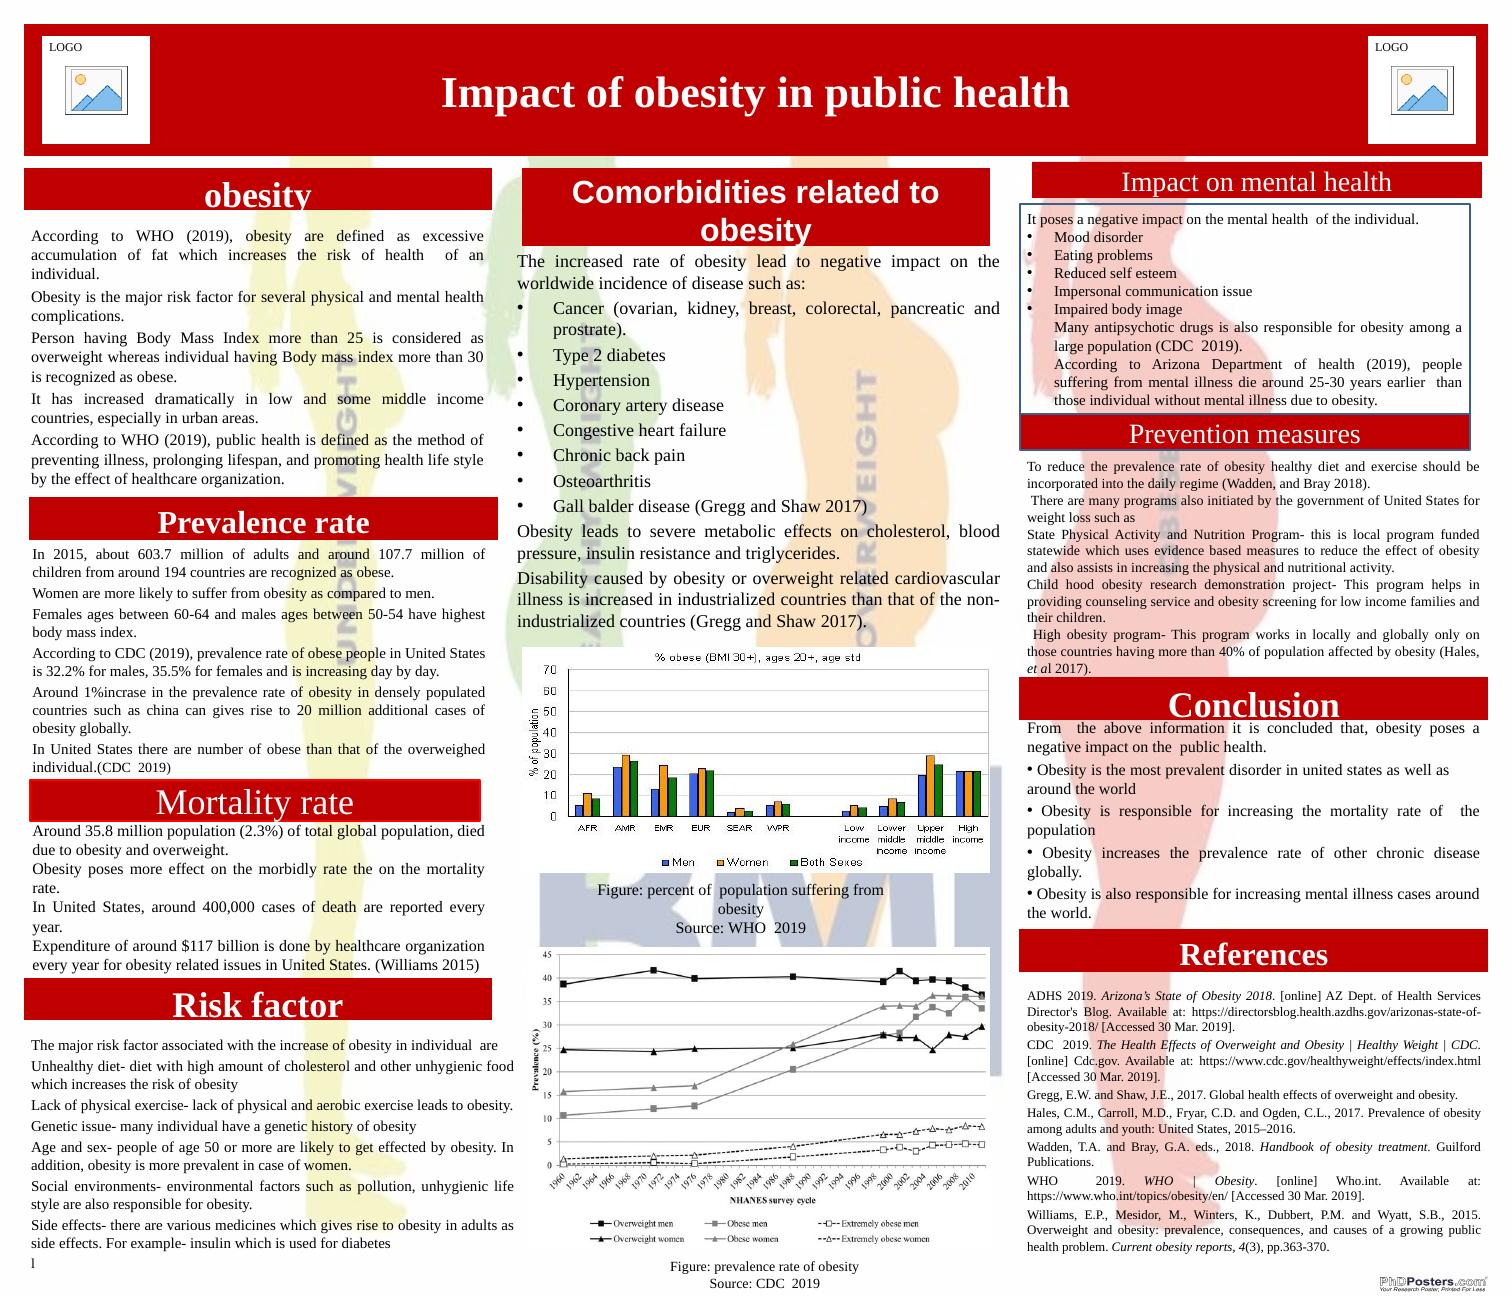 Impact of Obesity in Public Health_1